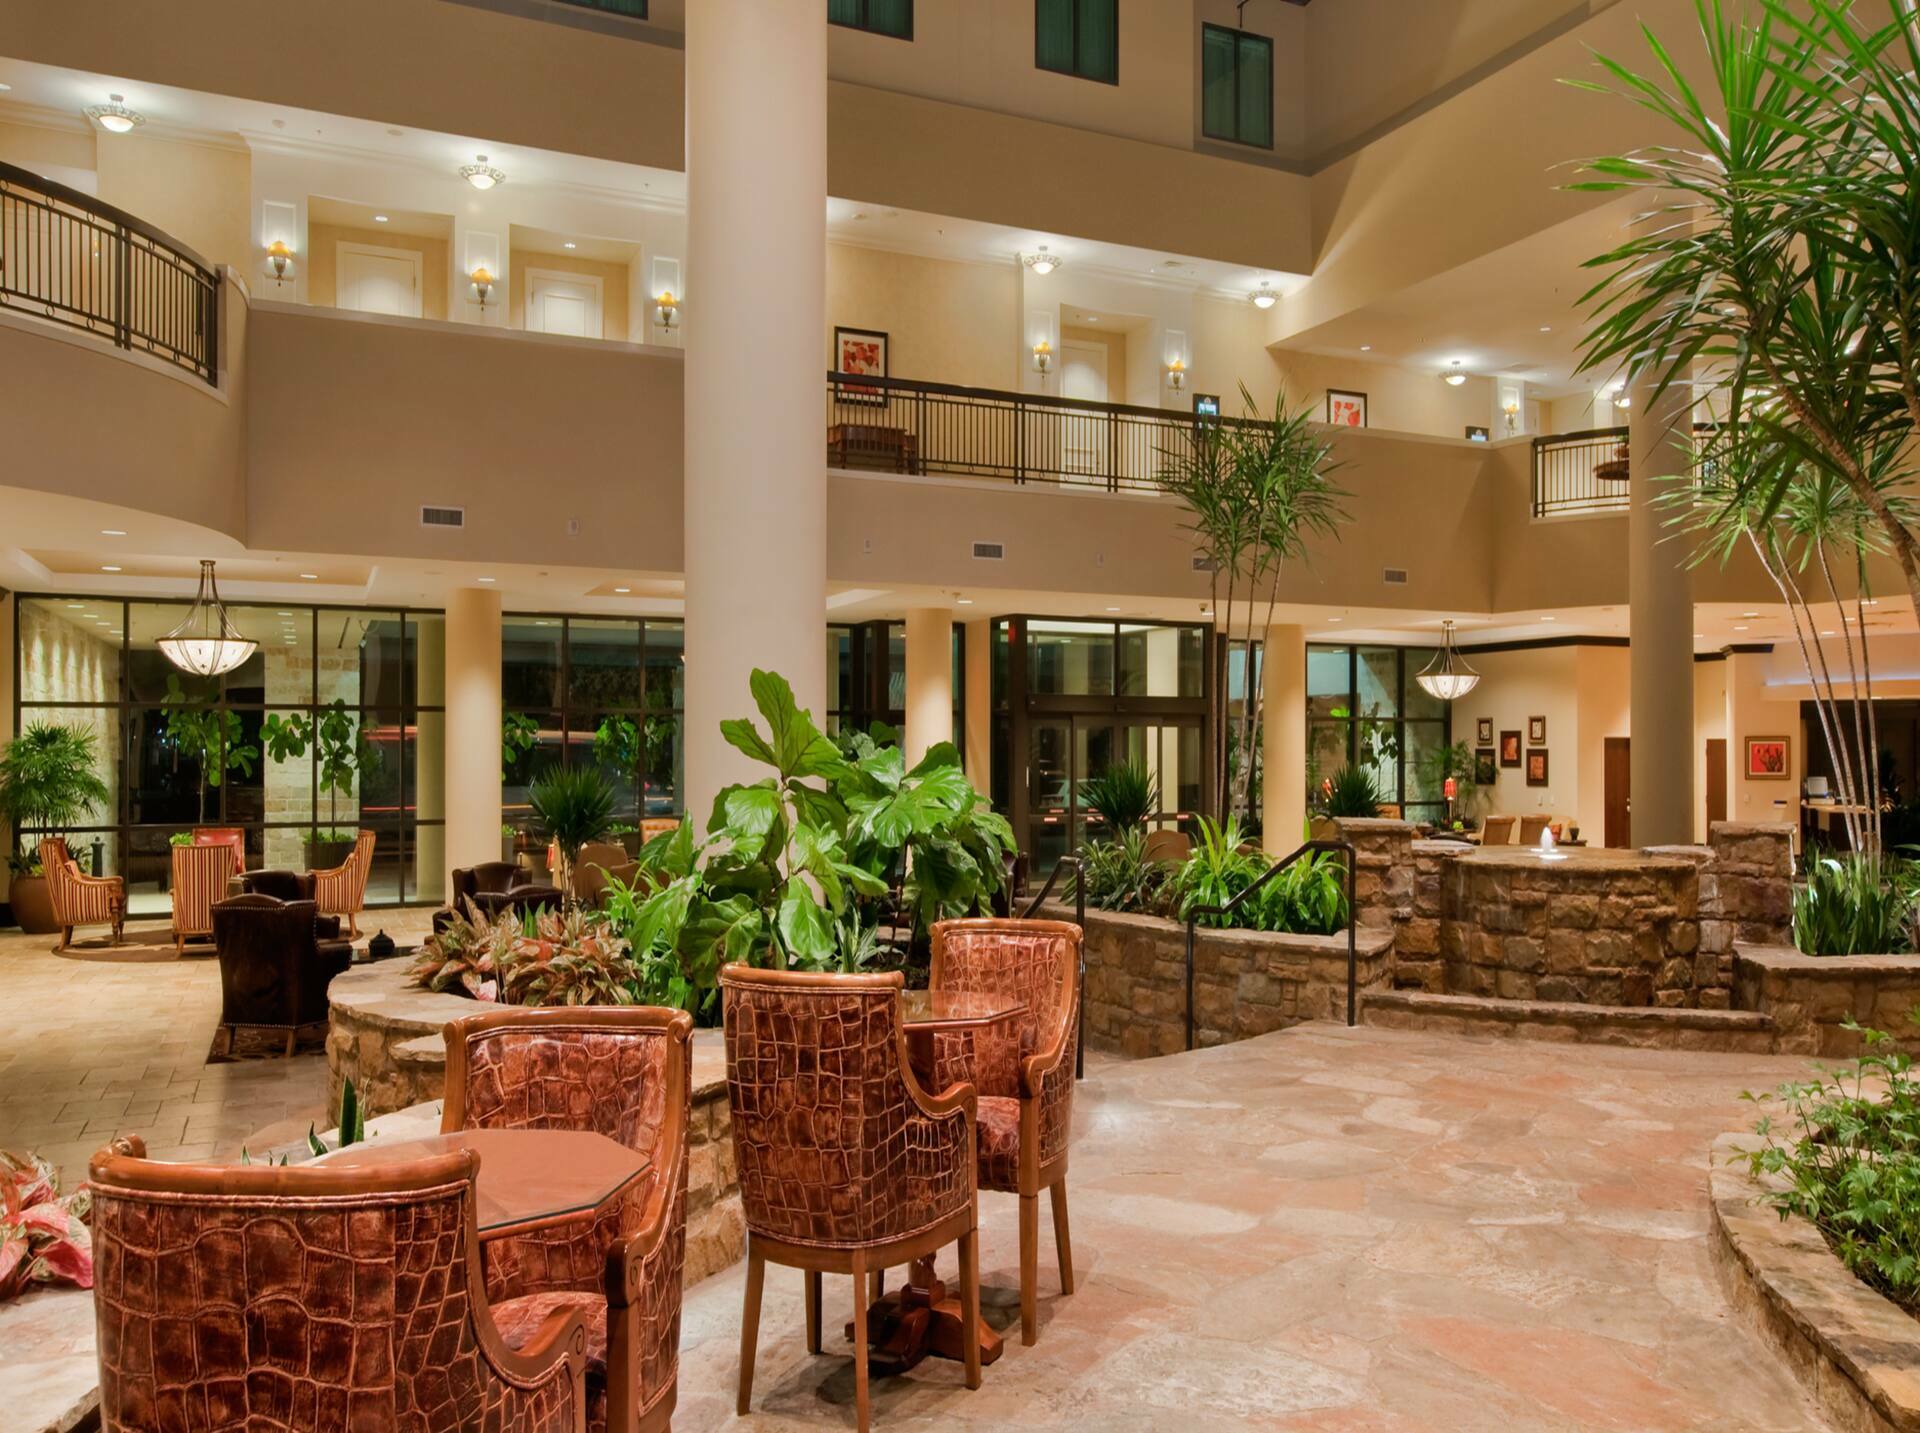 Photo of Embassy Suites by Hilton San Antonio Riverwalk Downtown, San Antonio, TX